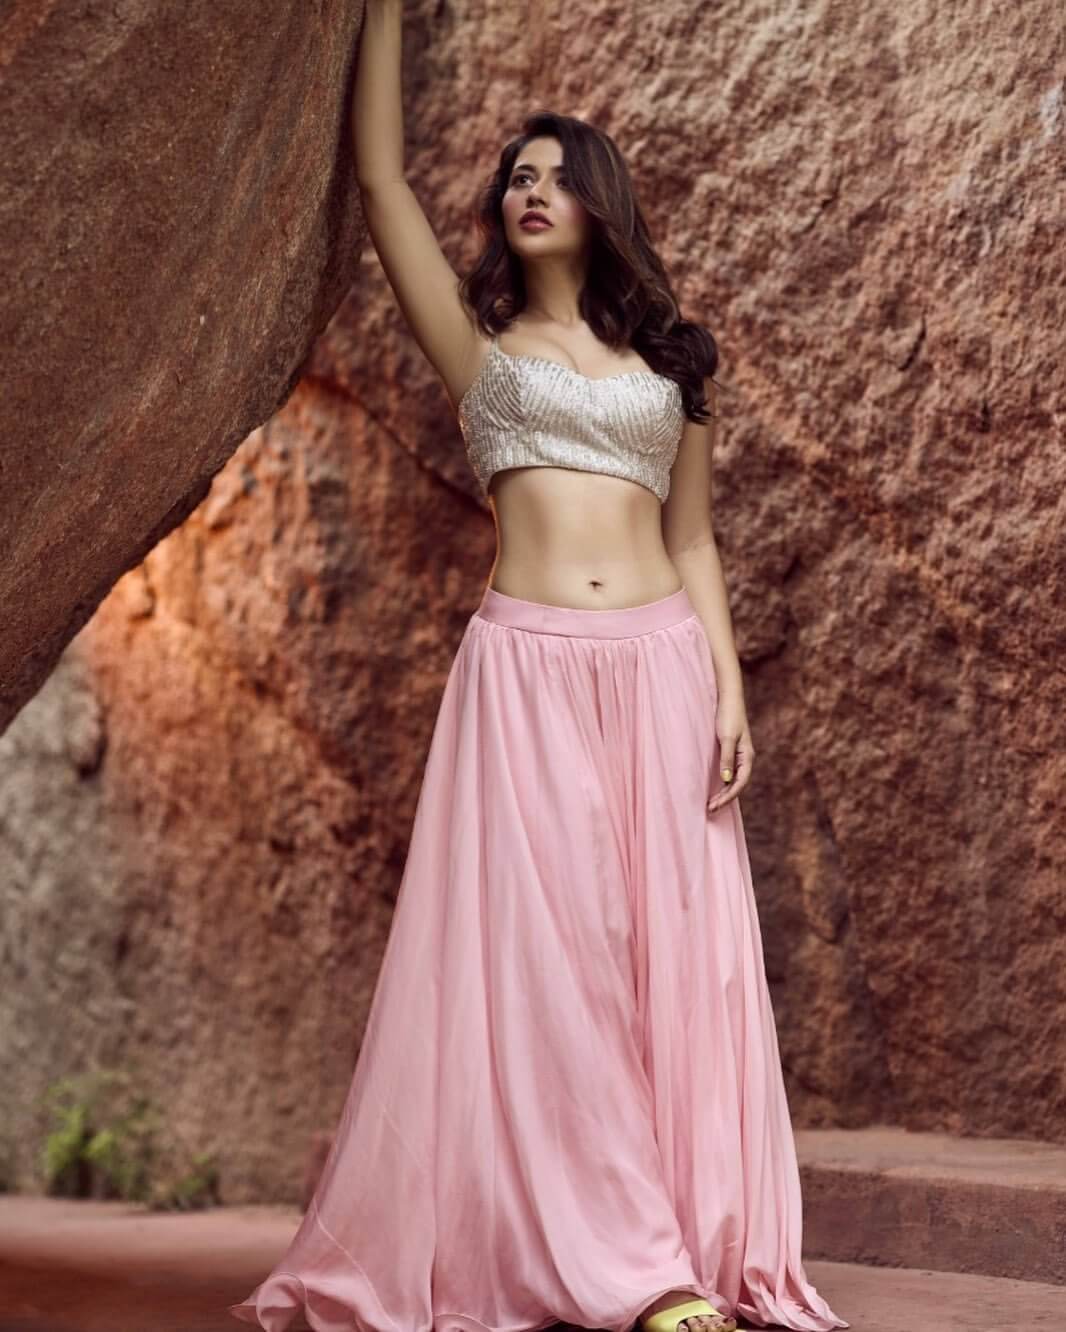 Priyanka Look Fabulous In Glittery Crop Top Whit Pistal Pink Skirt Outfit Priyanka Jawalkar Stunning Outfit Looks